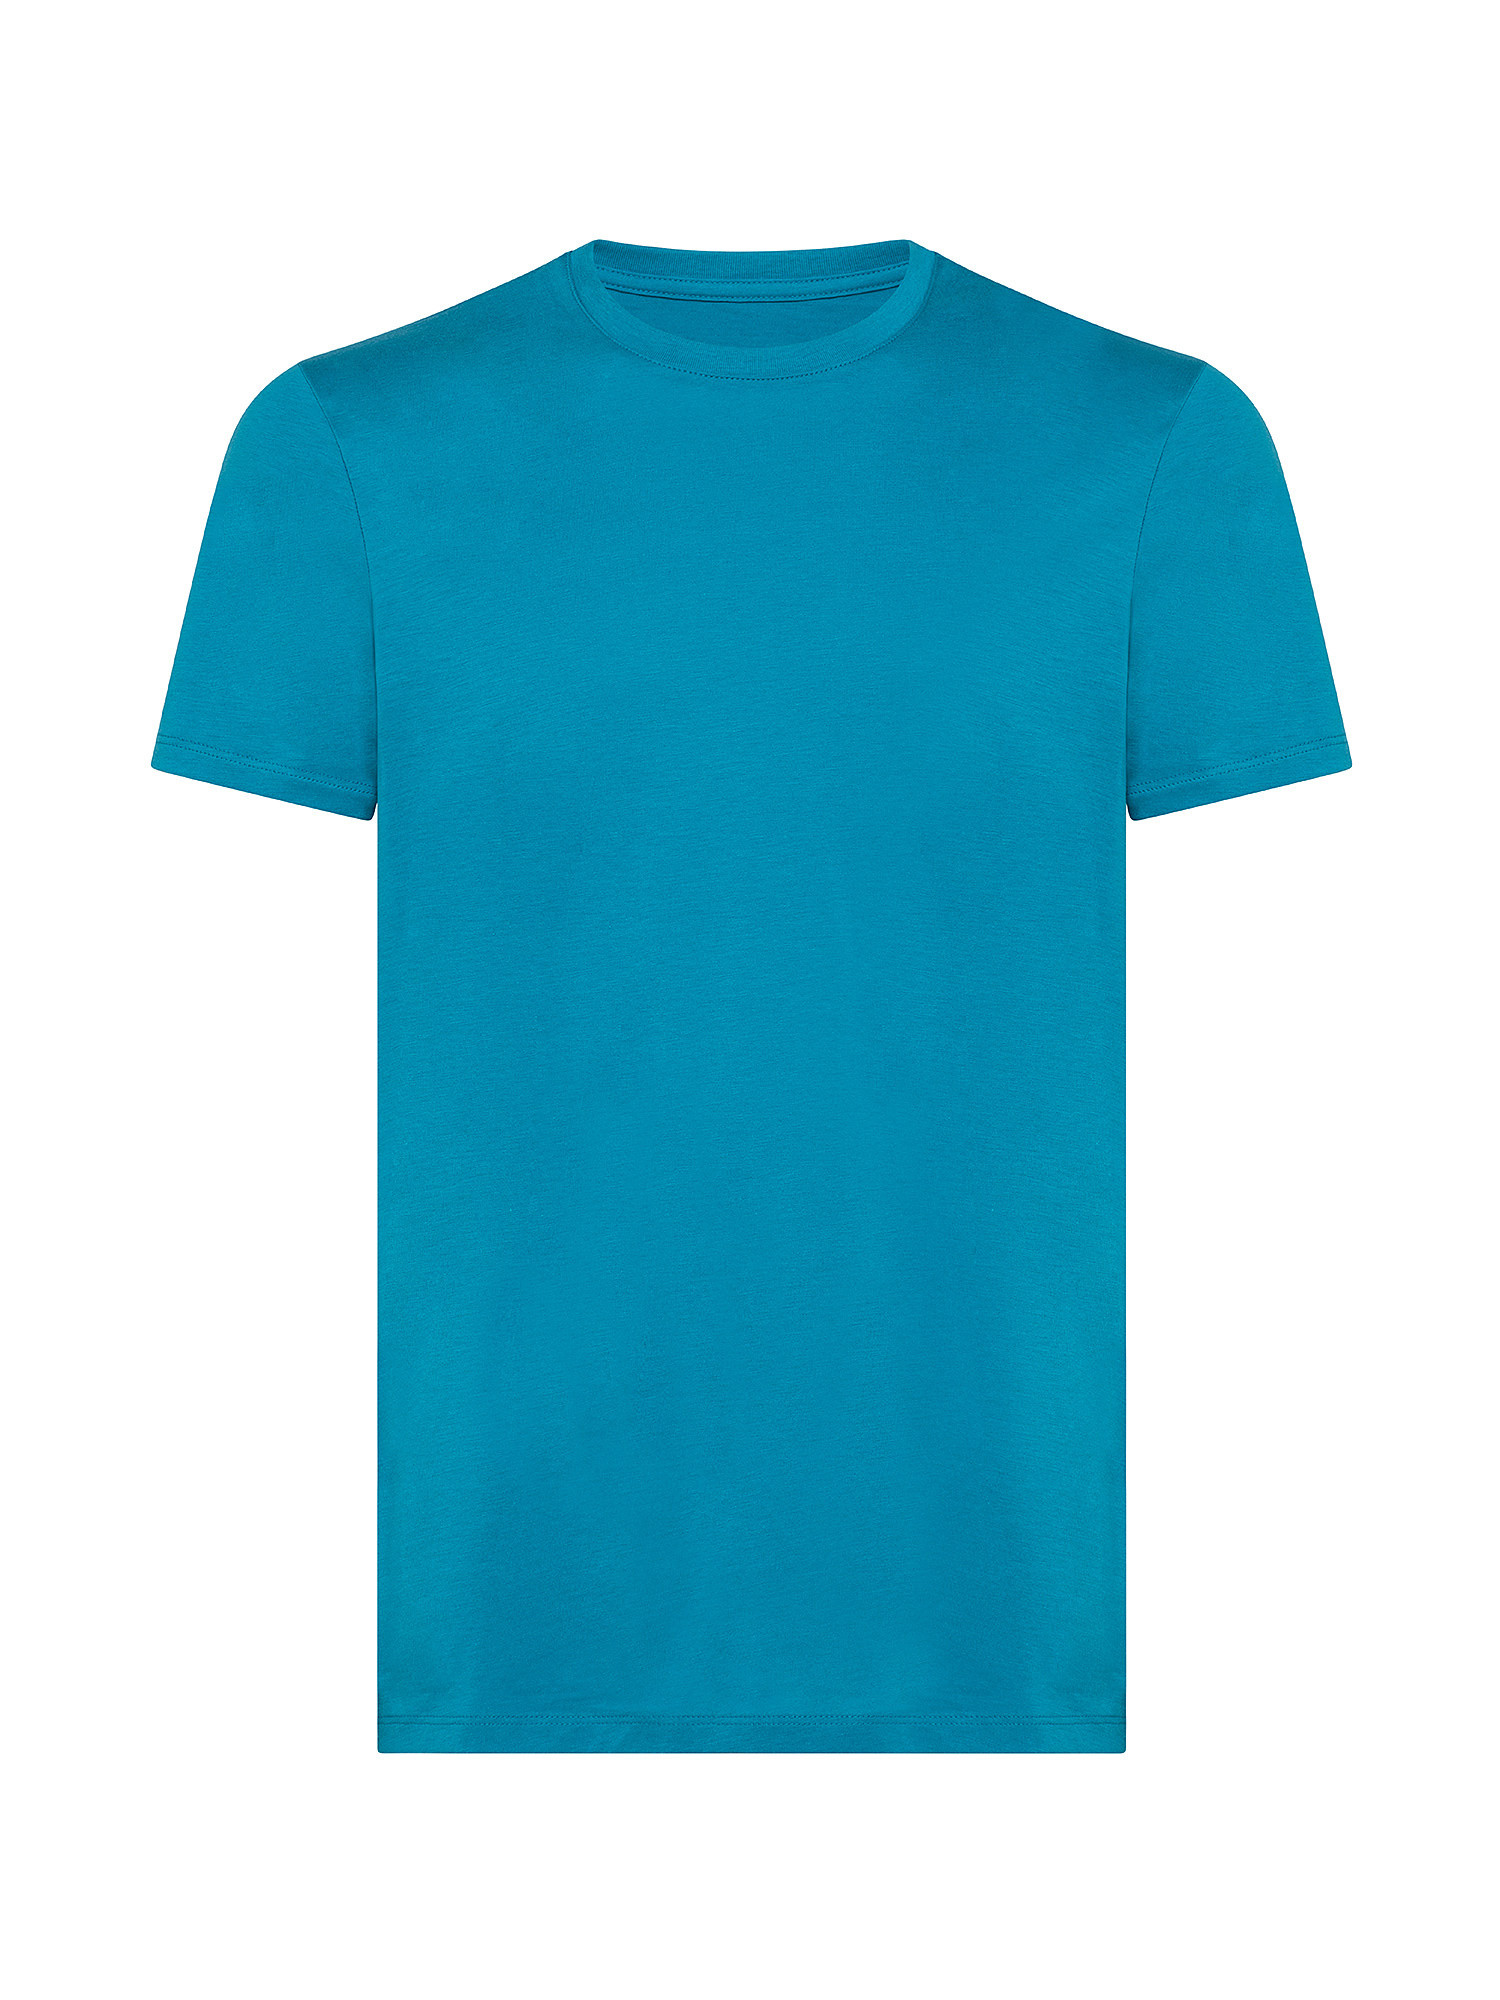 T-shirt, Turquoise, large image number 0